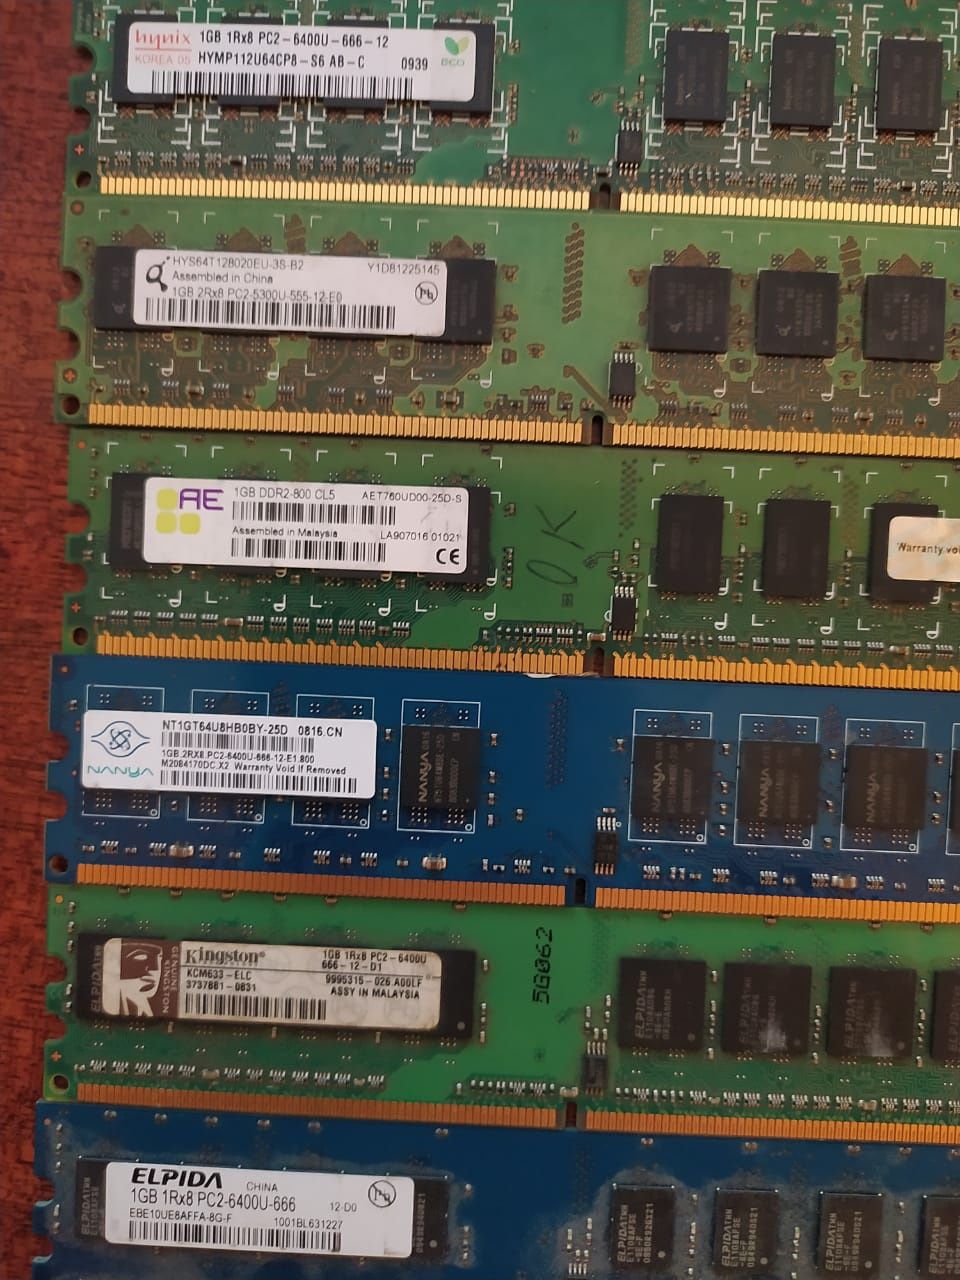 Оперативная память DDR2 2GB